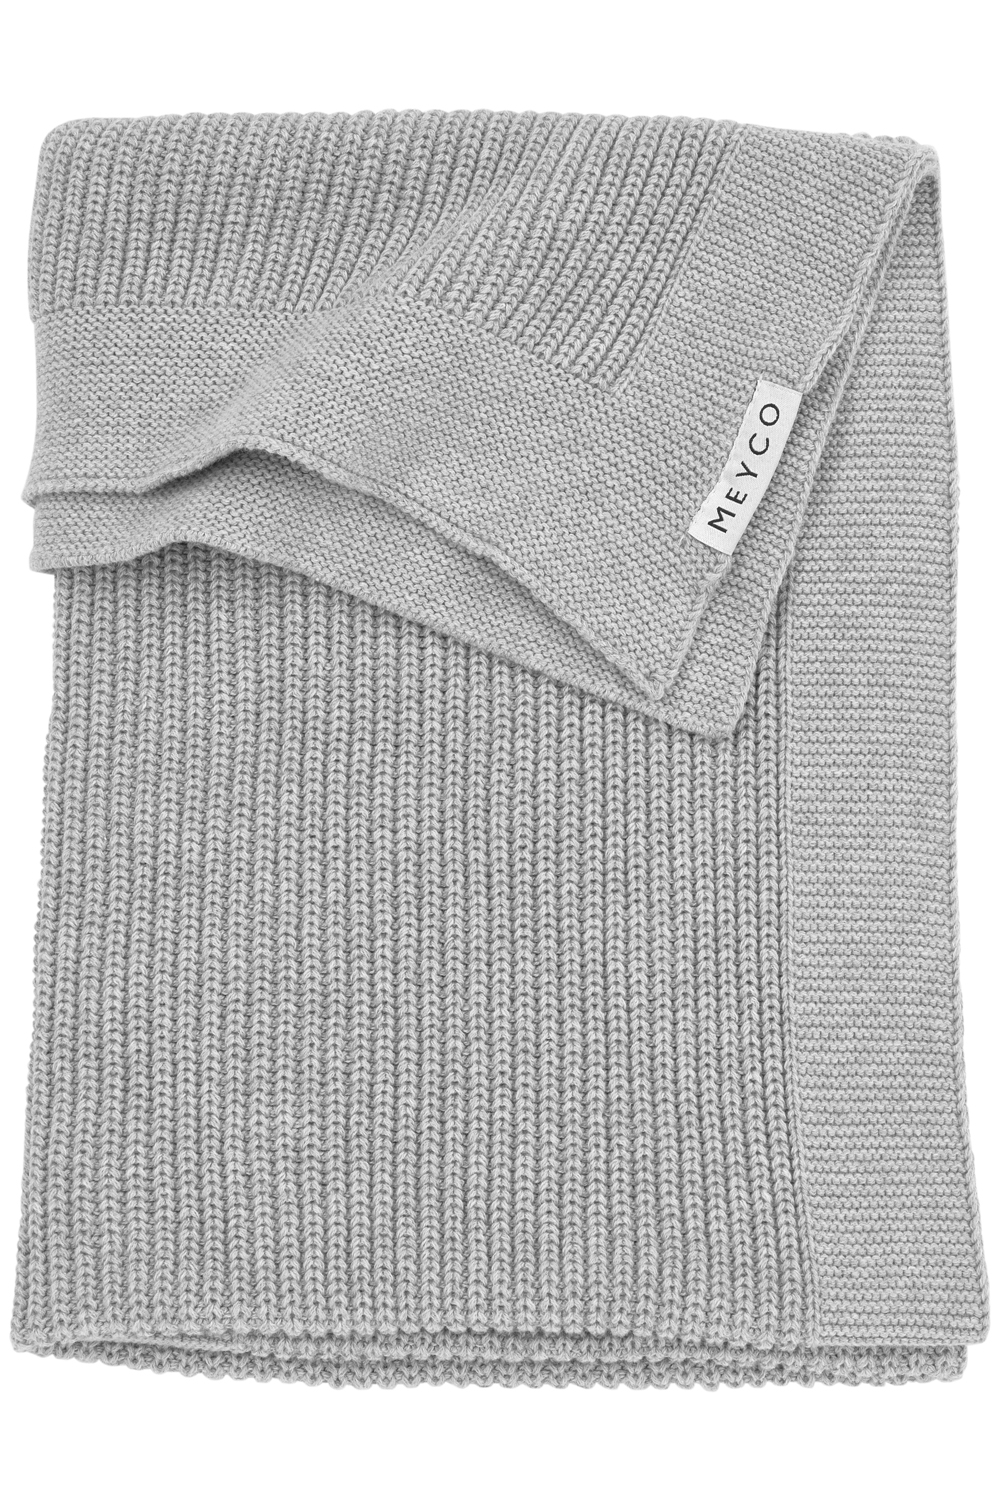 Cot Bed Blanket Rib - Grey Melange - 100x150cm